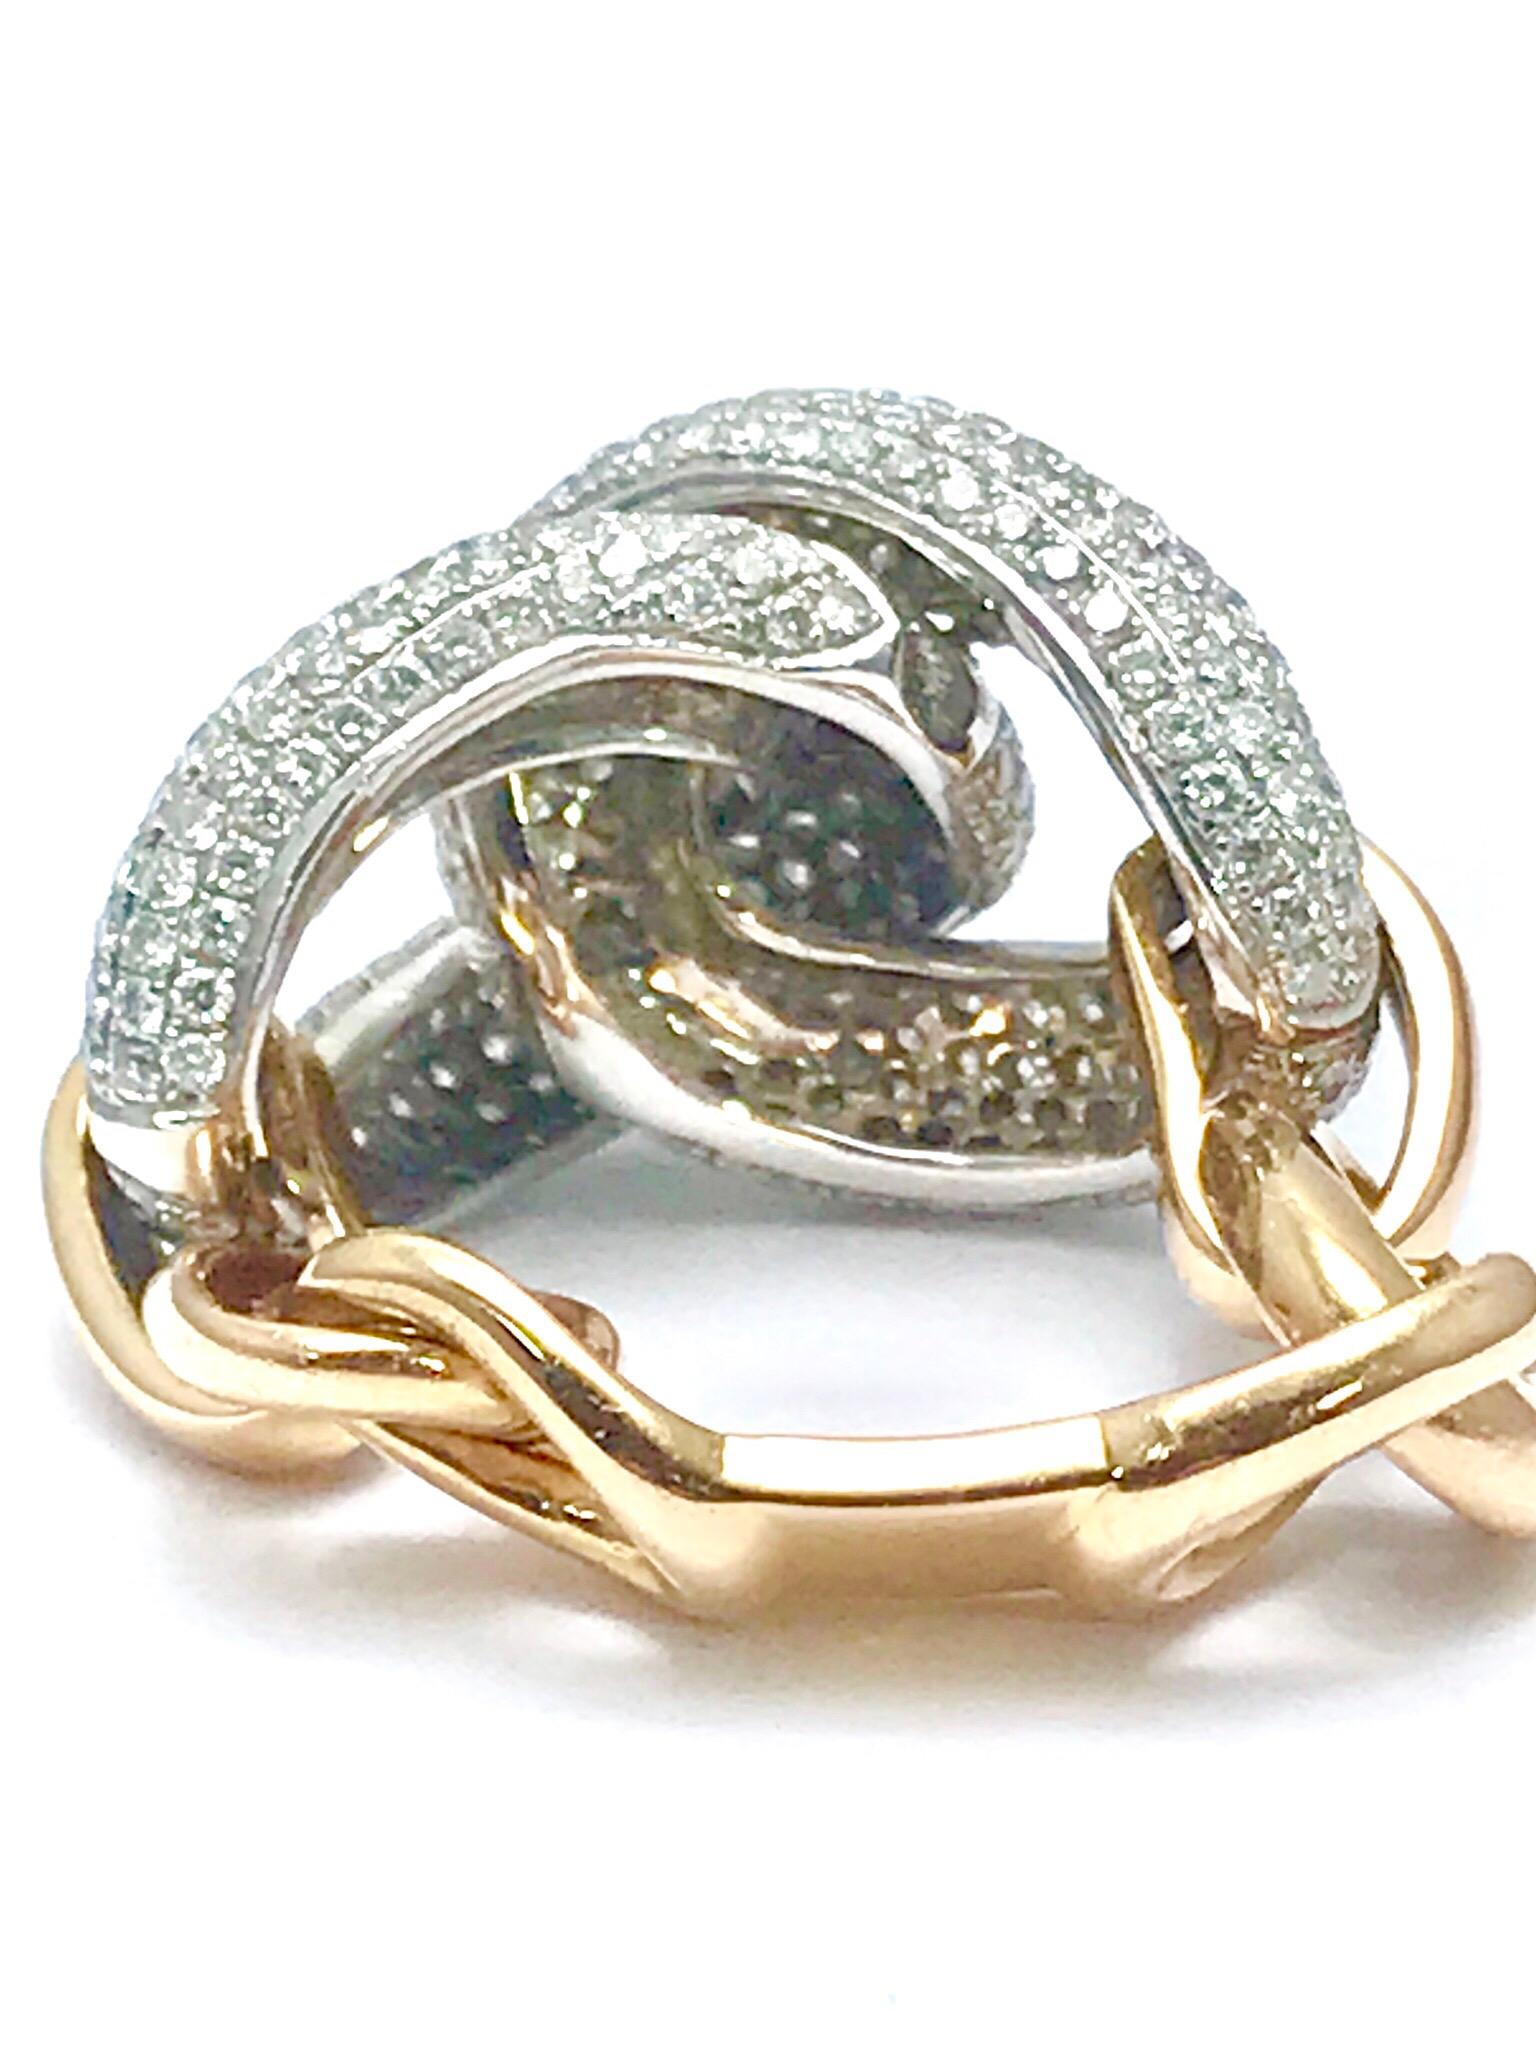 2.35 Carat Round Brilliant Pave Diamond Rose Gold Chain Link Fashion Ring (Rundschliff)